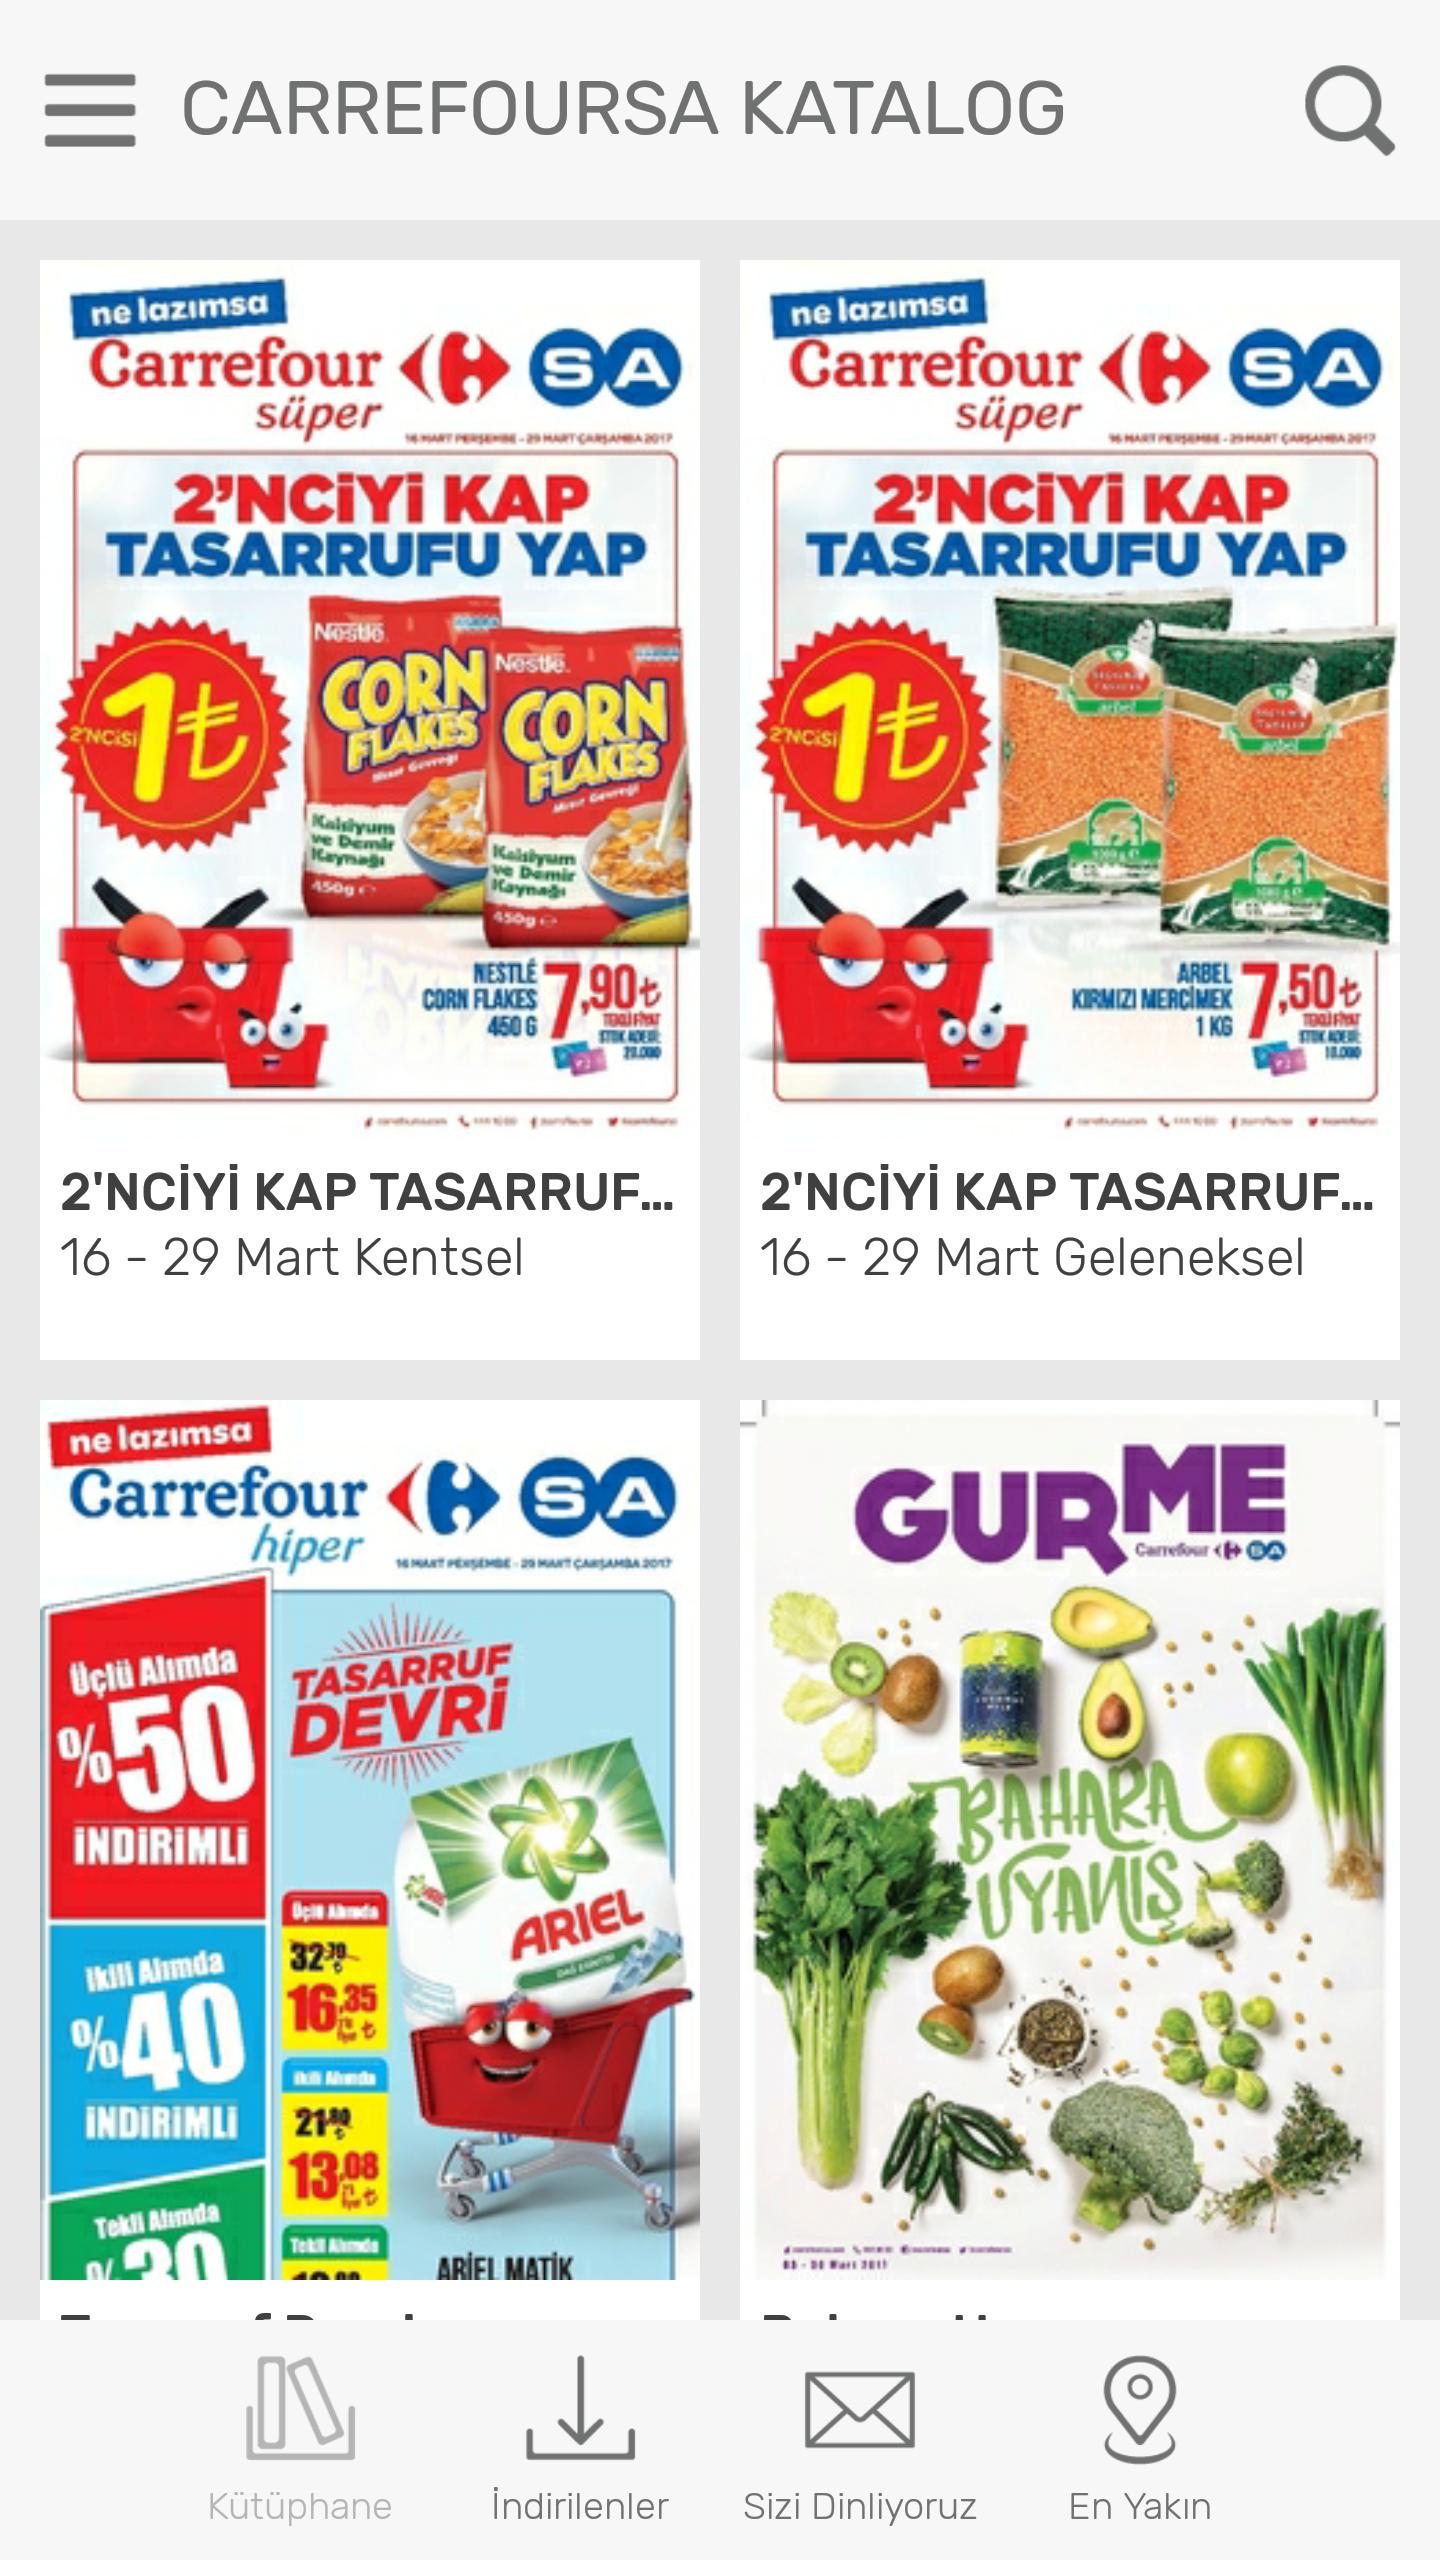 CarrefourSA Katalog APK for Android Download